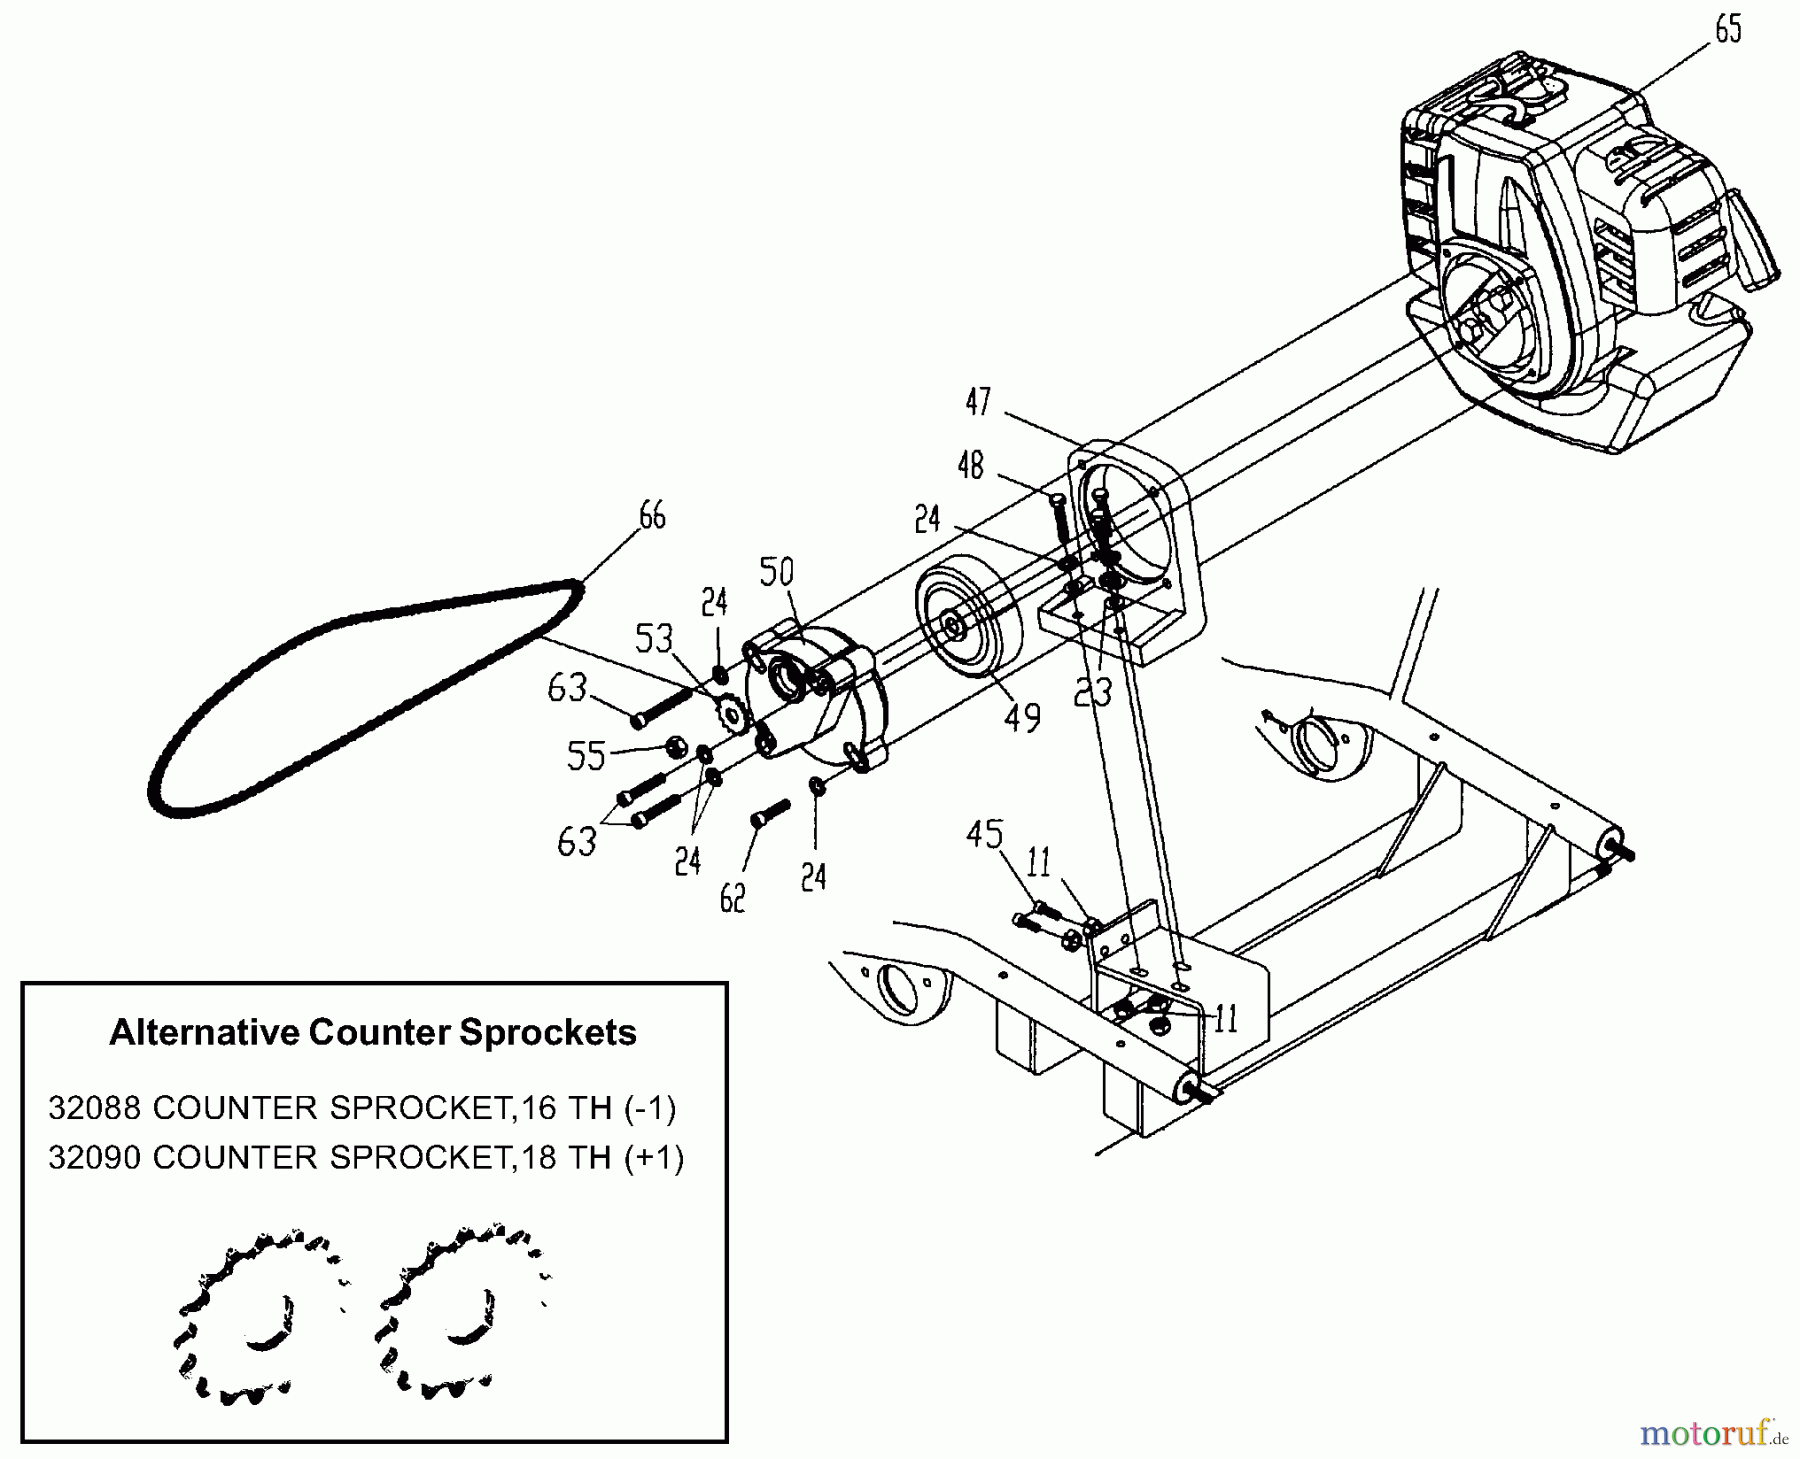  Tanaka Sonstiges TPK-400GS - Tanaka 40cc Paveracer Kart Gear Box, Clutch Drum & Chain